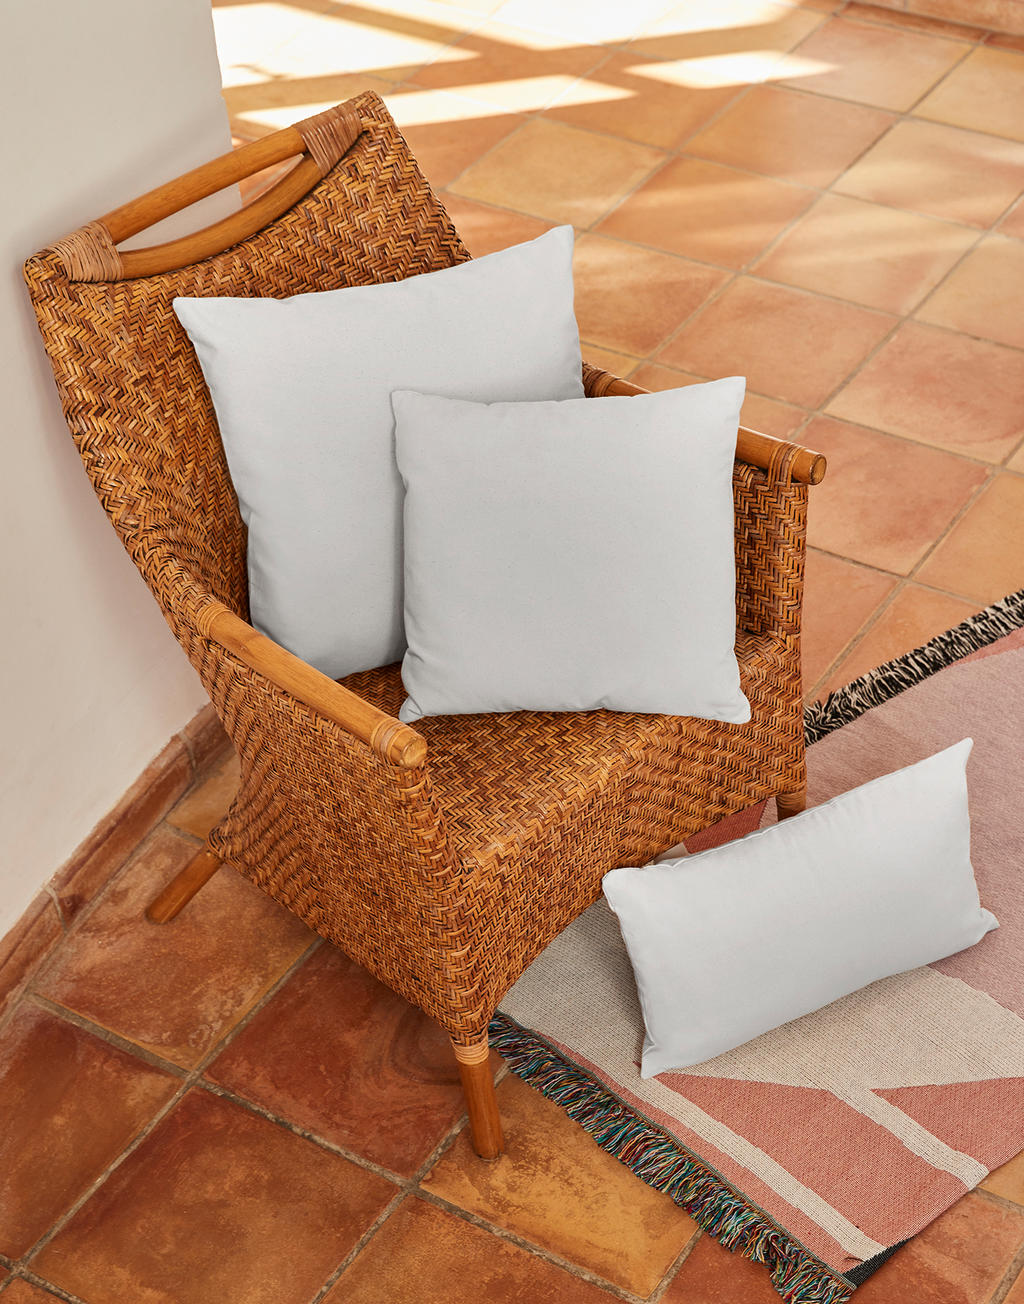  Fairtrade Cotton Canvas Cushion Cover in Farbe Natural